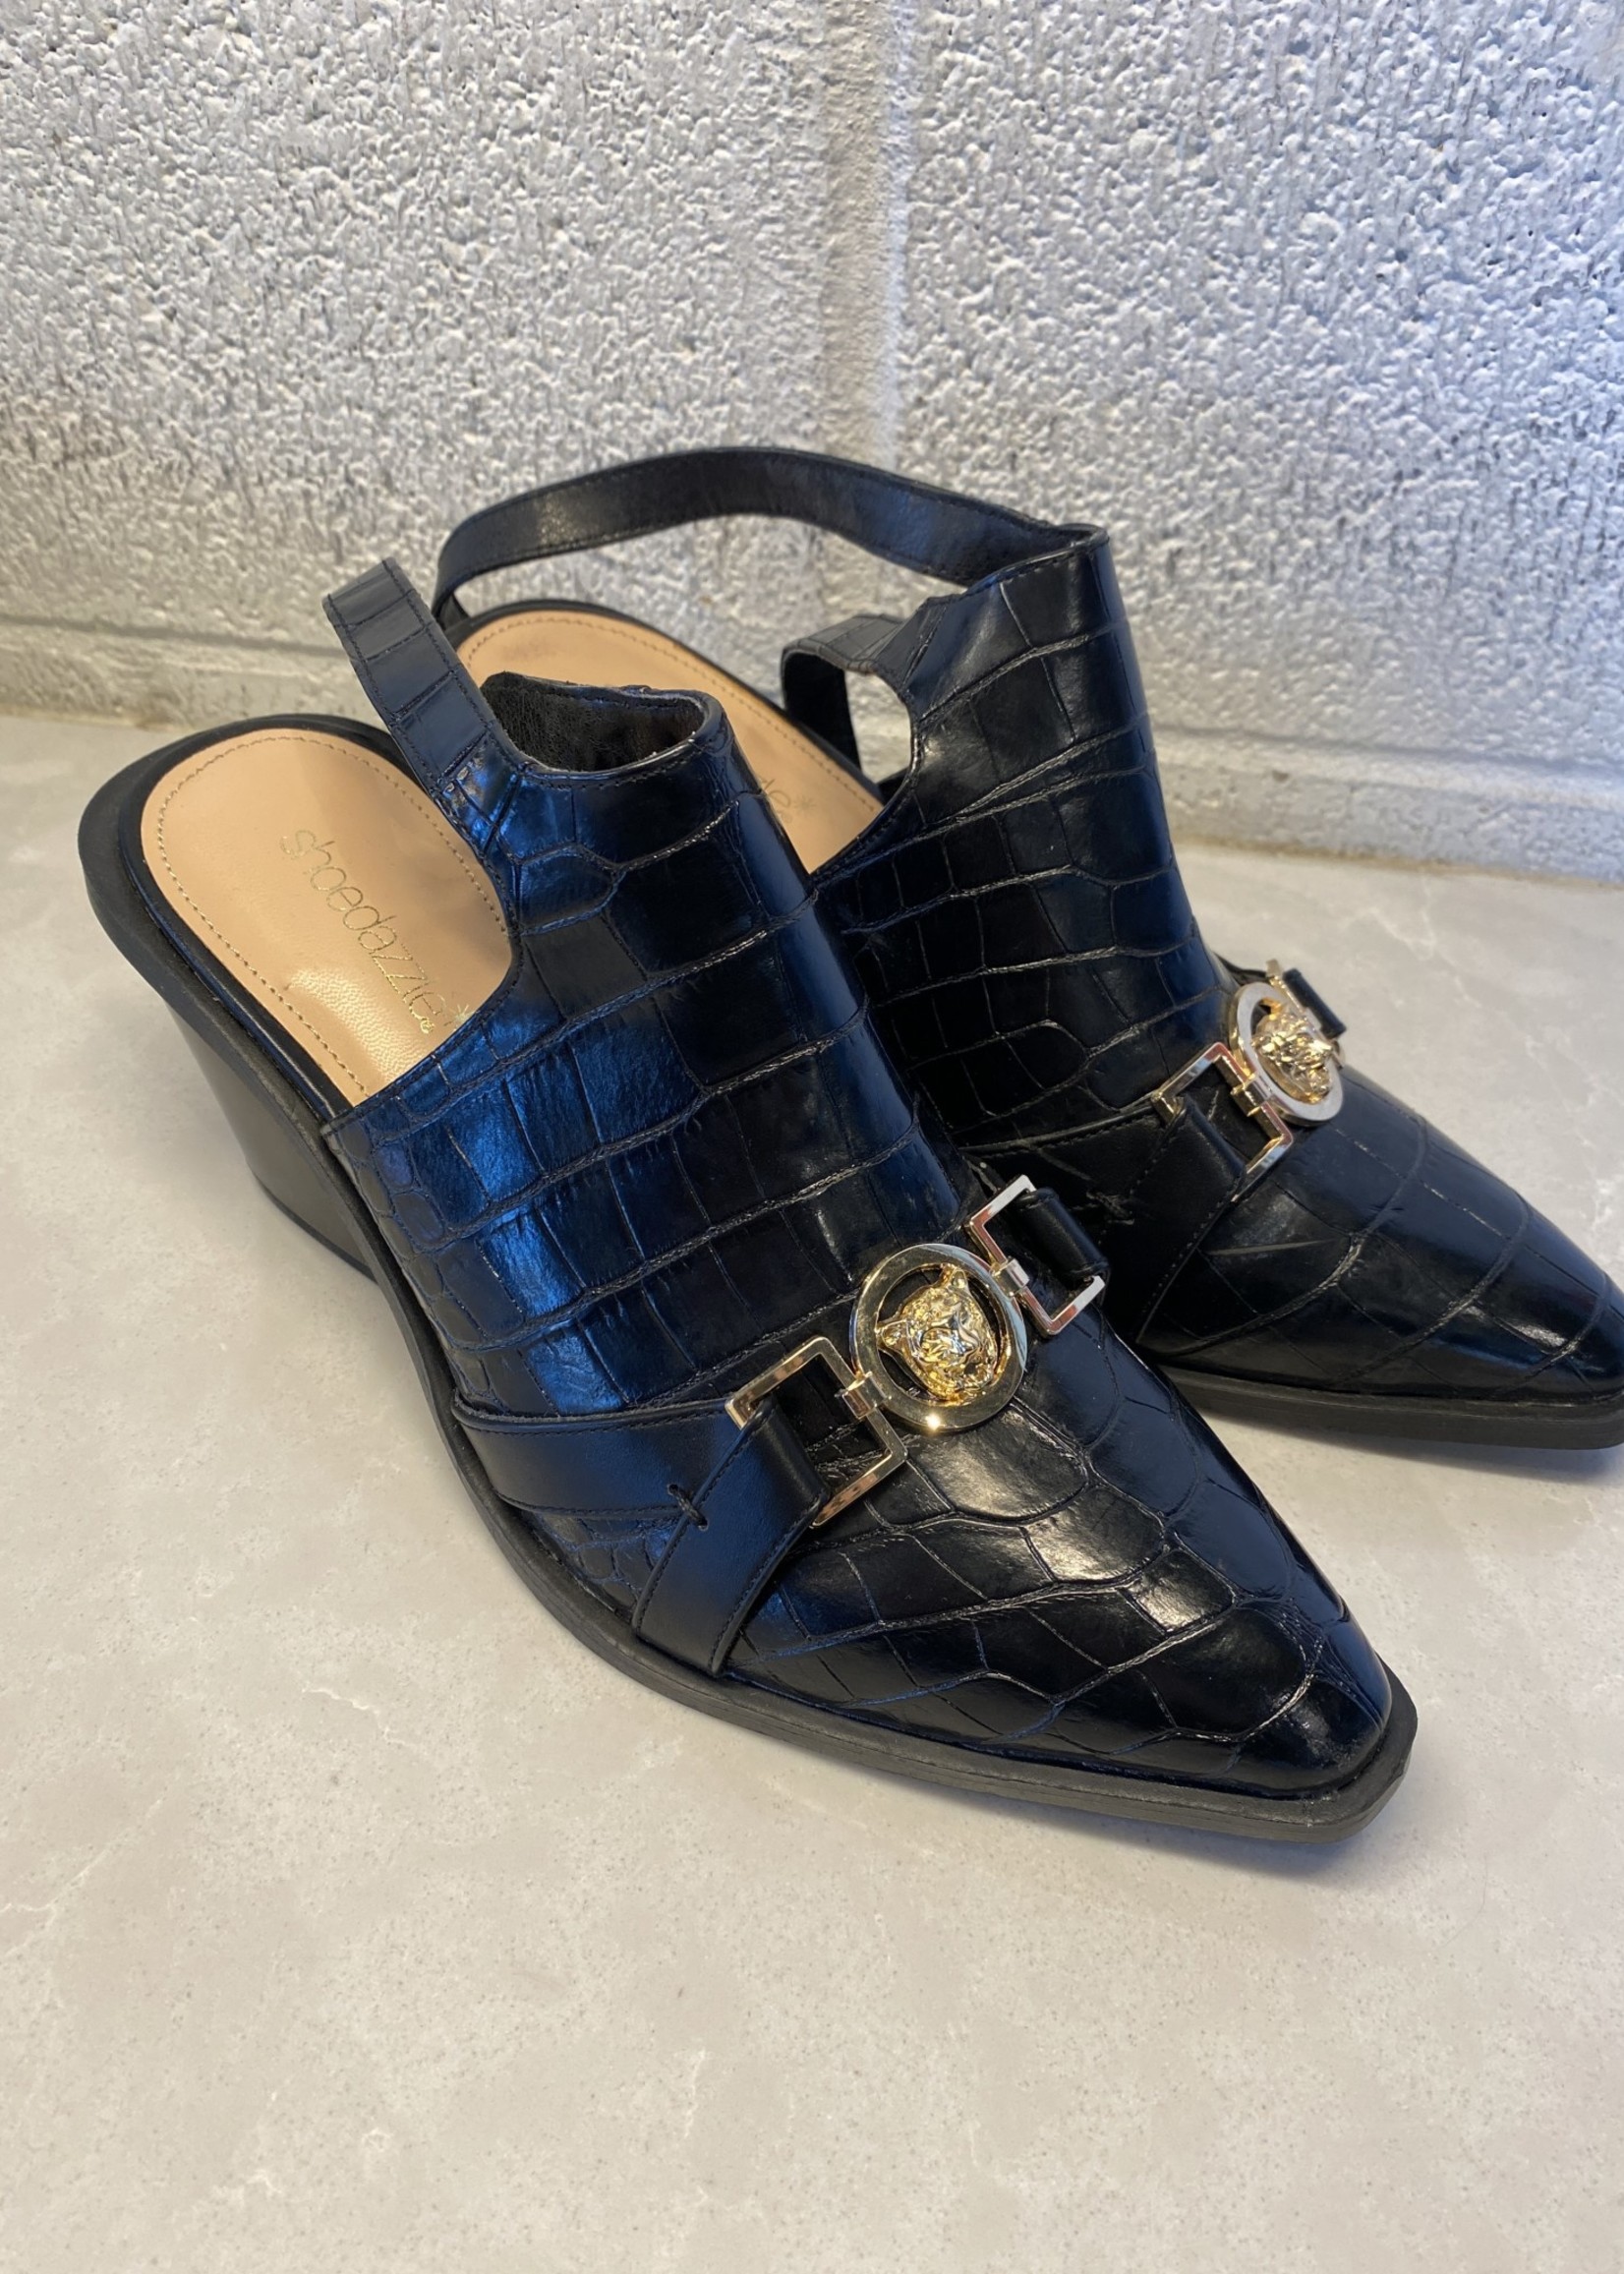 Shoedazzle Black Versace Style Heeled Booties 9